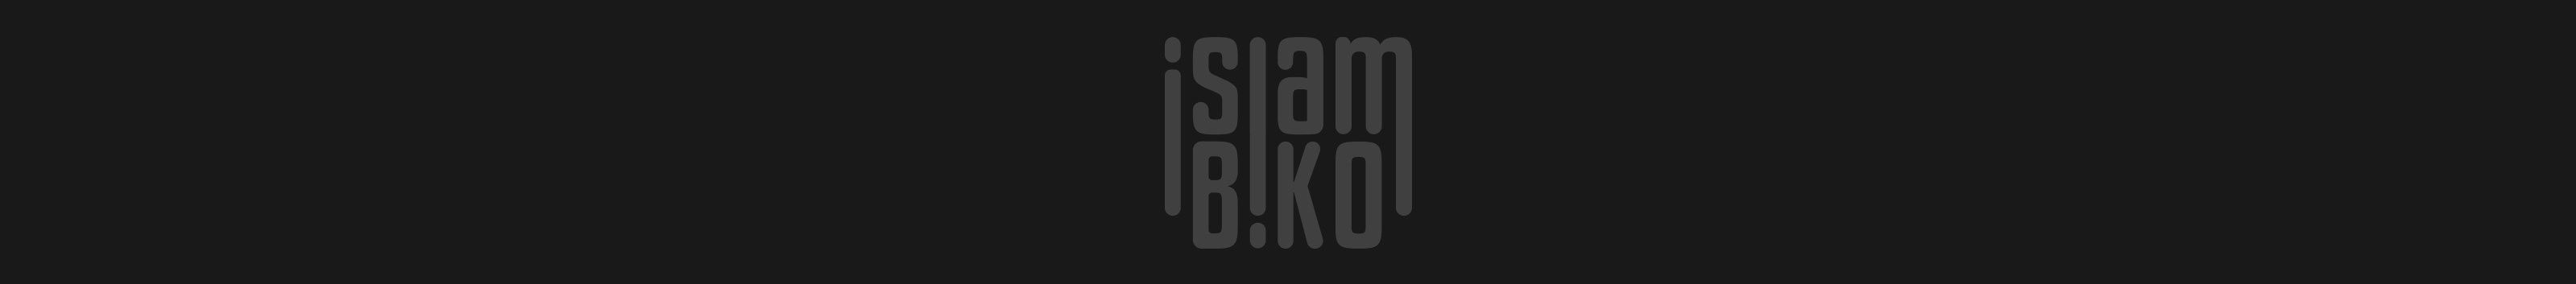 islam biko's profile banner